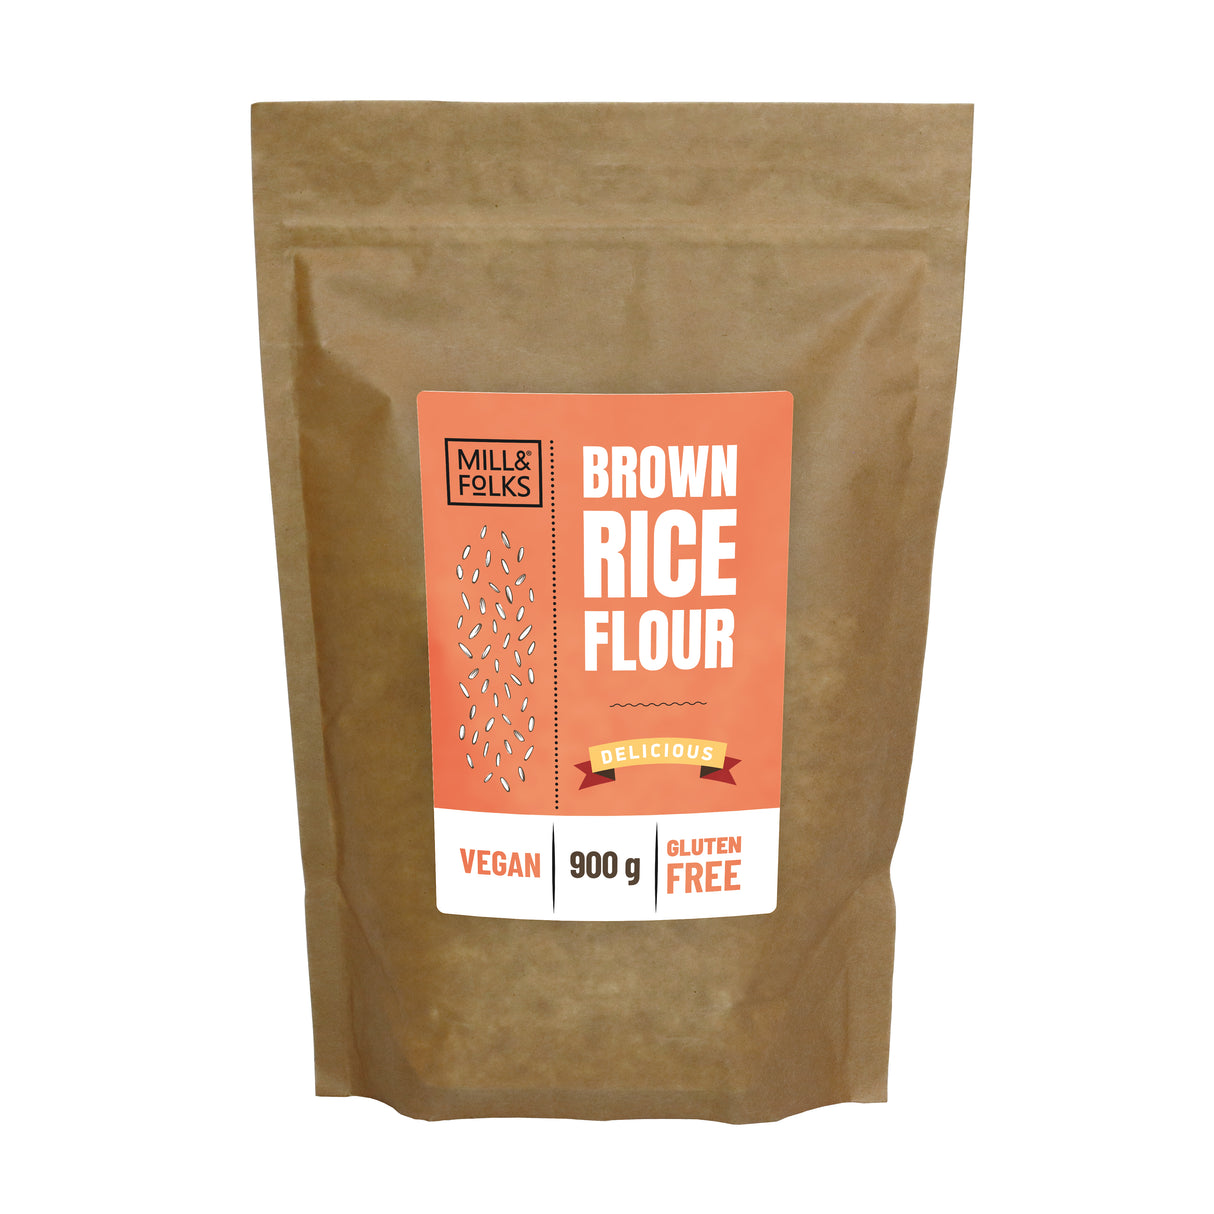 Brown rice flour 900g